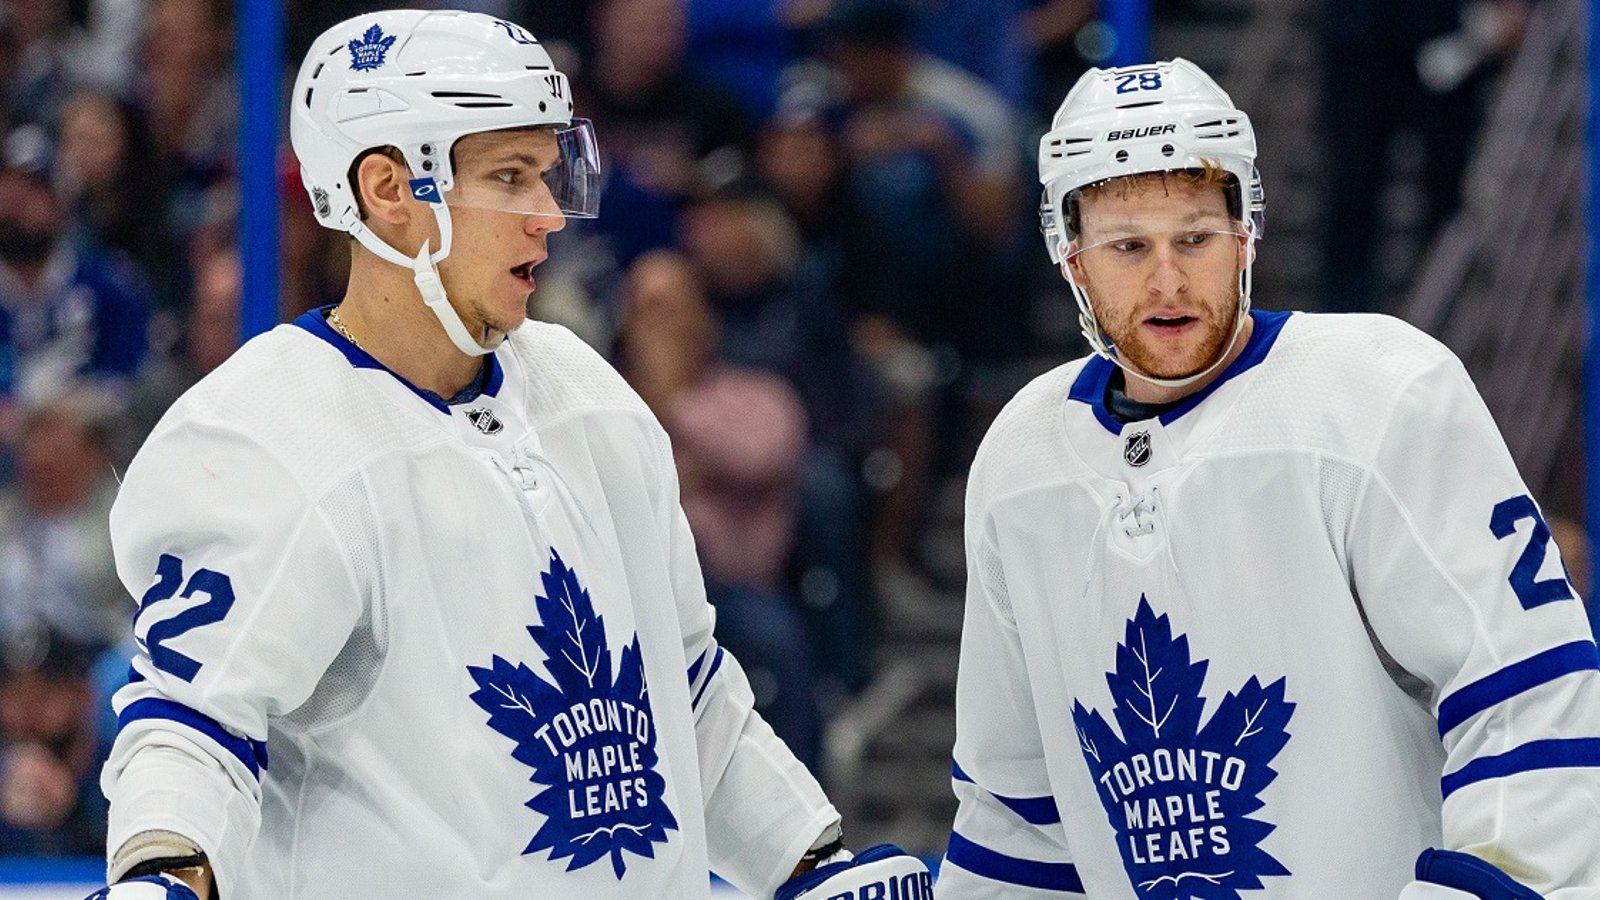 Two Maple Leafs make TSN's “Trade Bait” list.